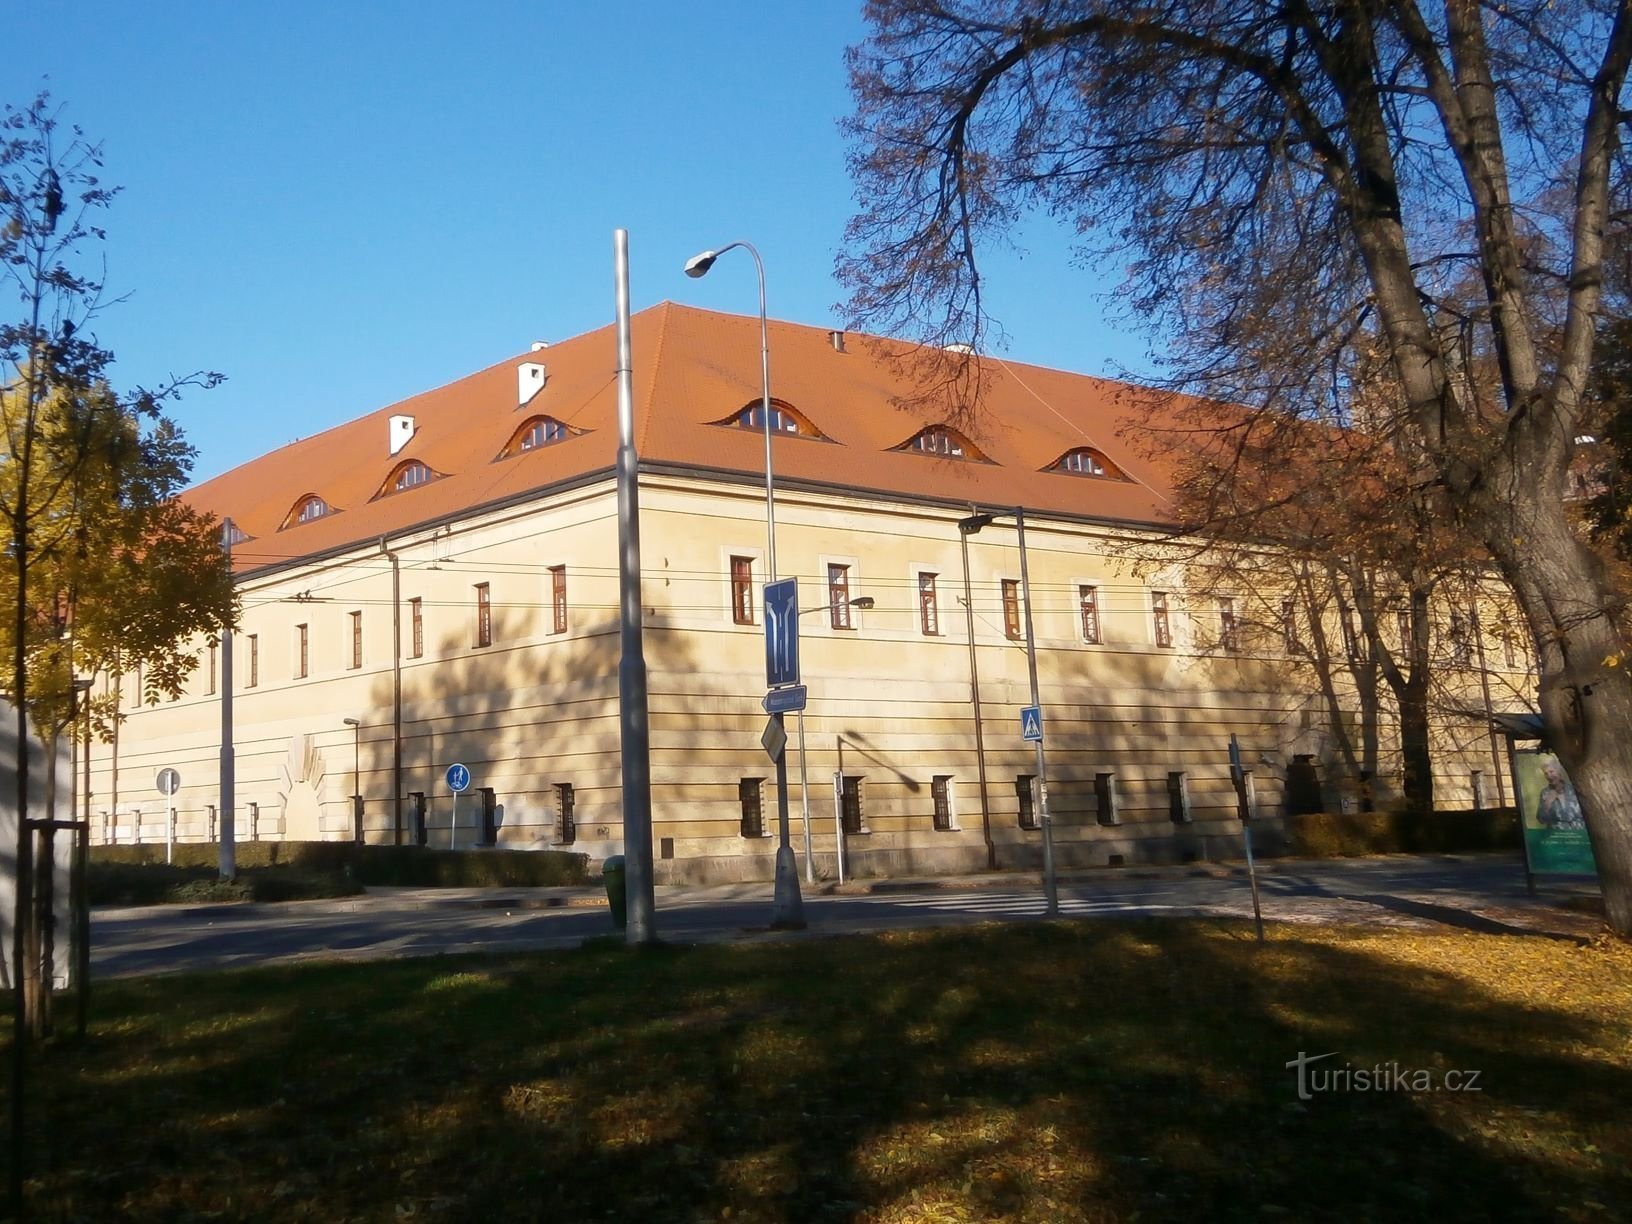 Cavalry barracks (Hradec Králové, 1.11.2015 April XNUMX)